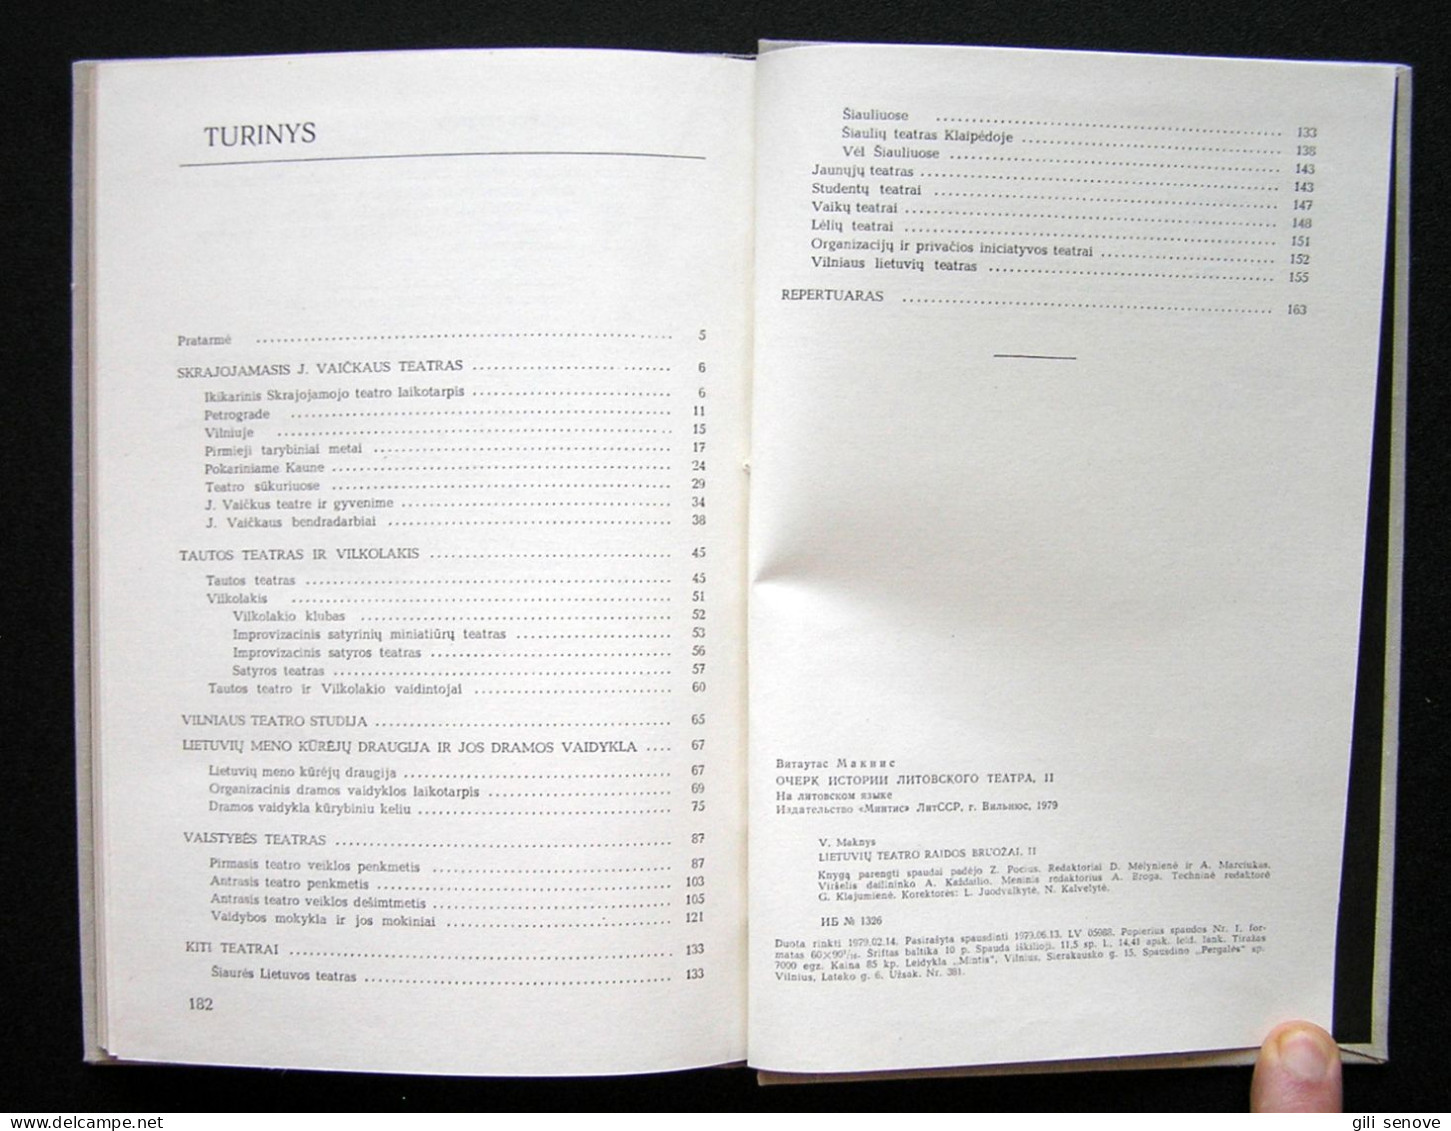 Lithuanian Book / Lietuvių Teatro Raidos Bruožai (1I Tomas) By Maknys 1979 - Cultural